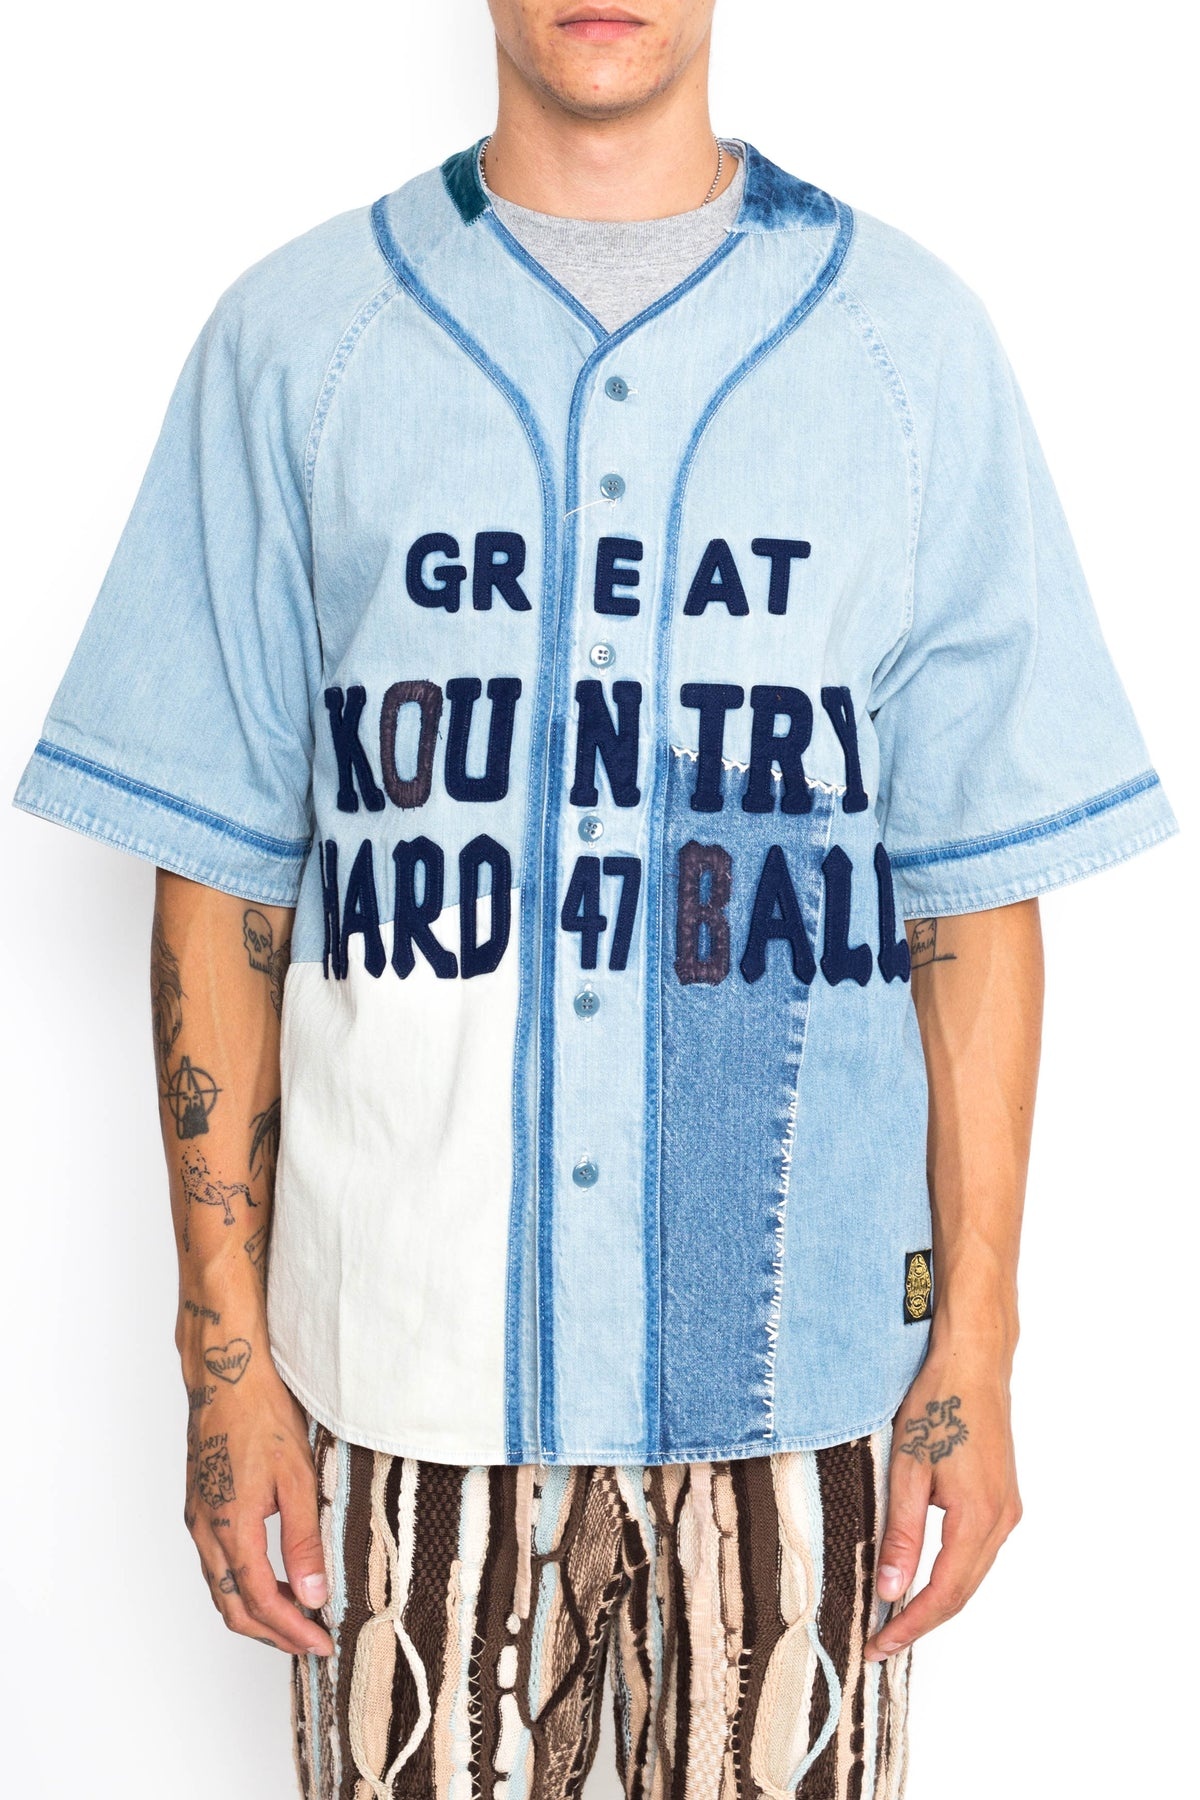 8oz Reconstruction Denim GREAT KOUNTRY Baseball Shirt - 1